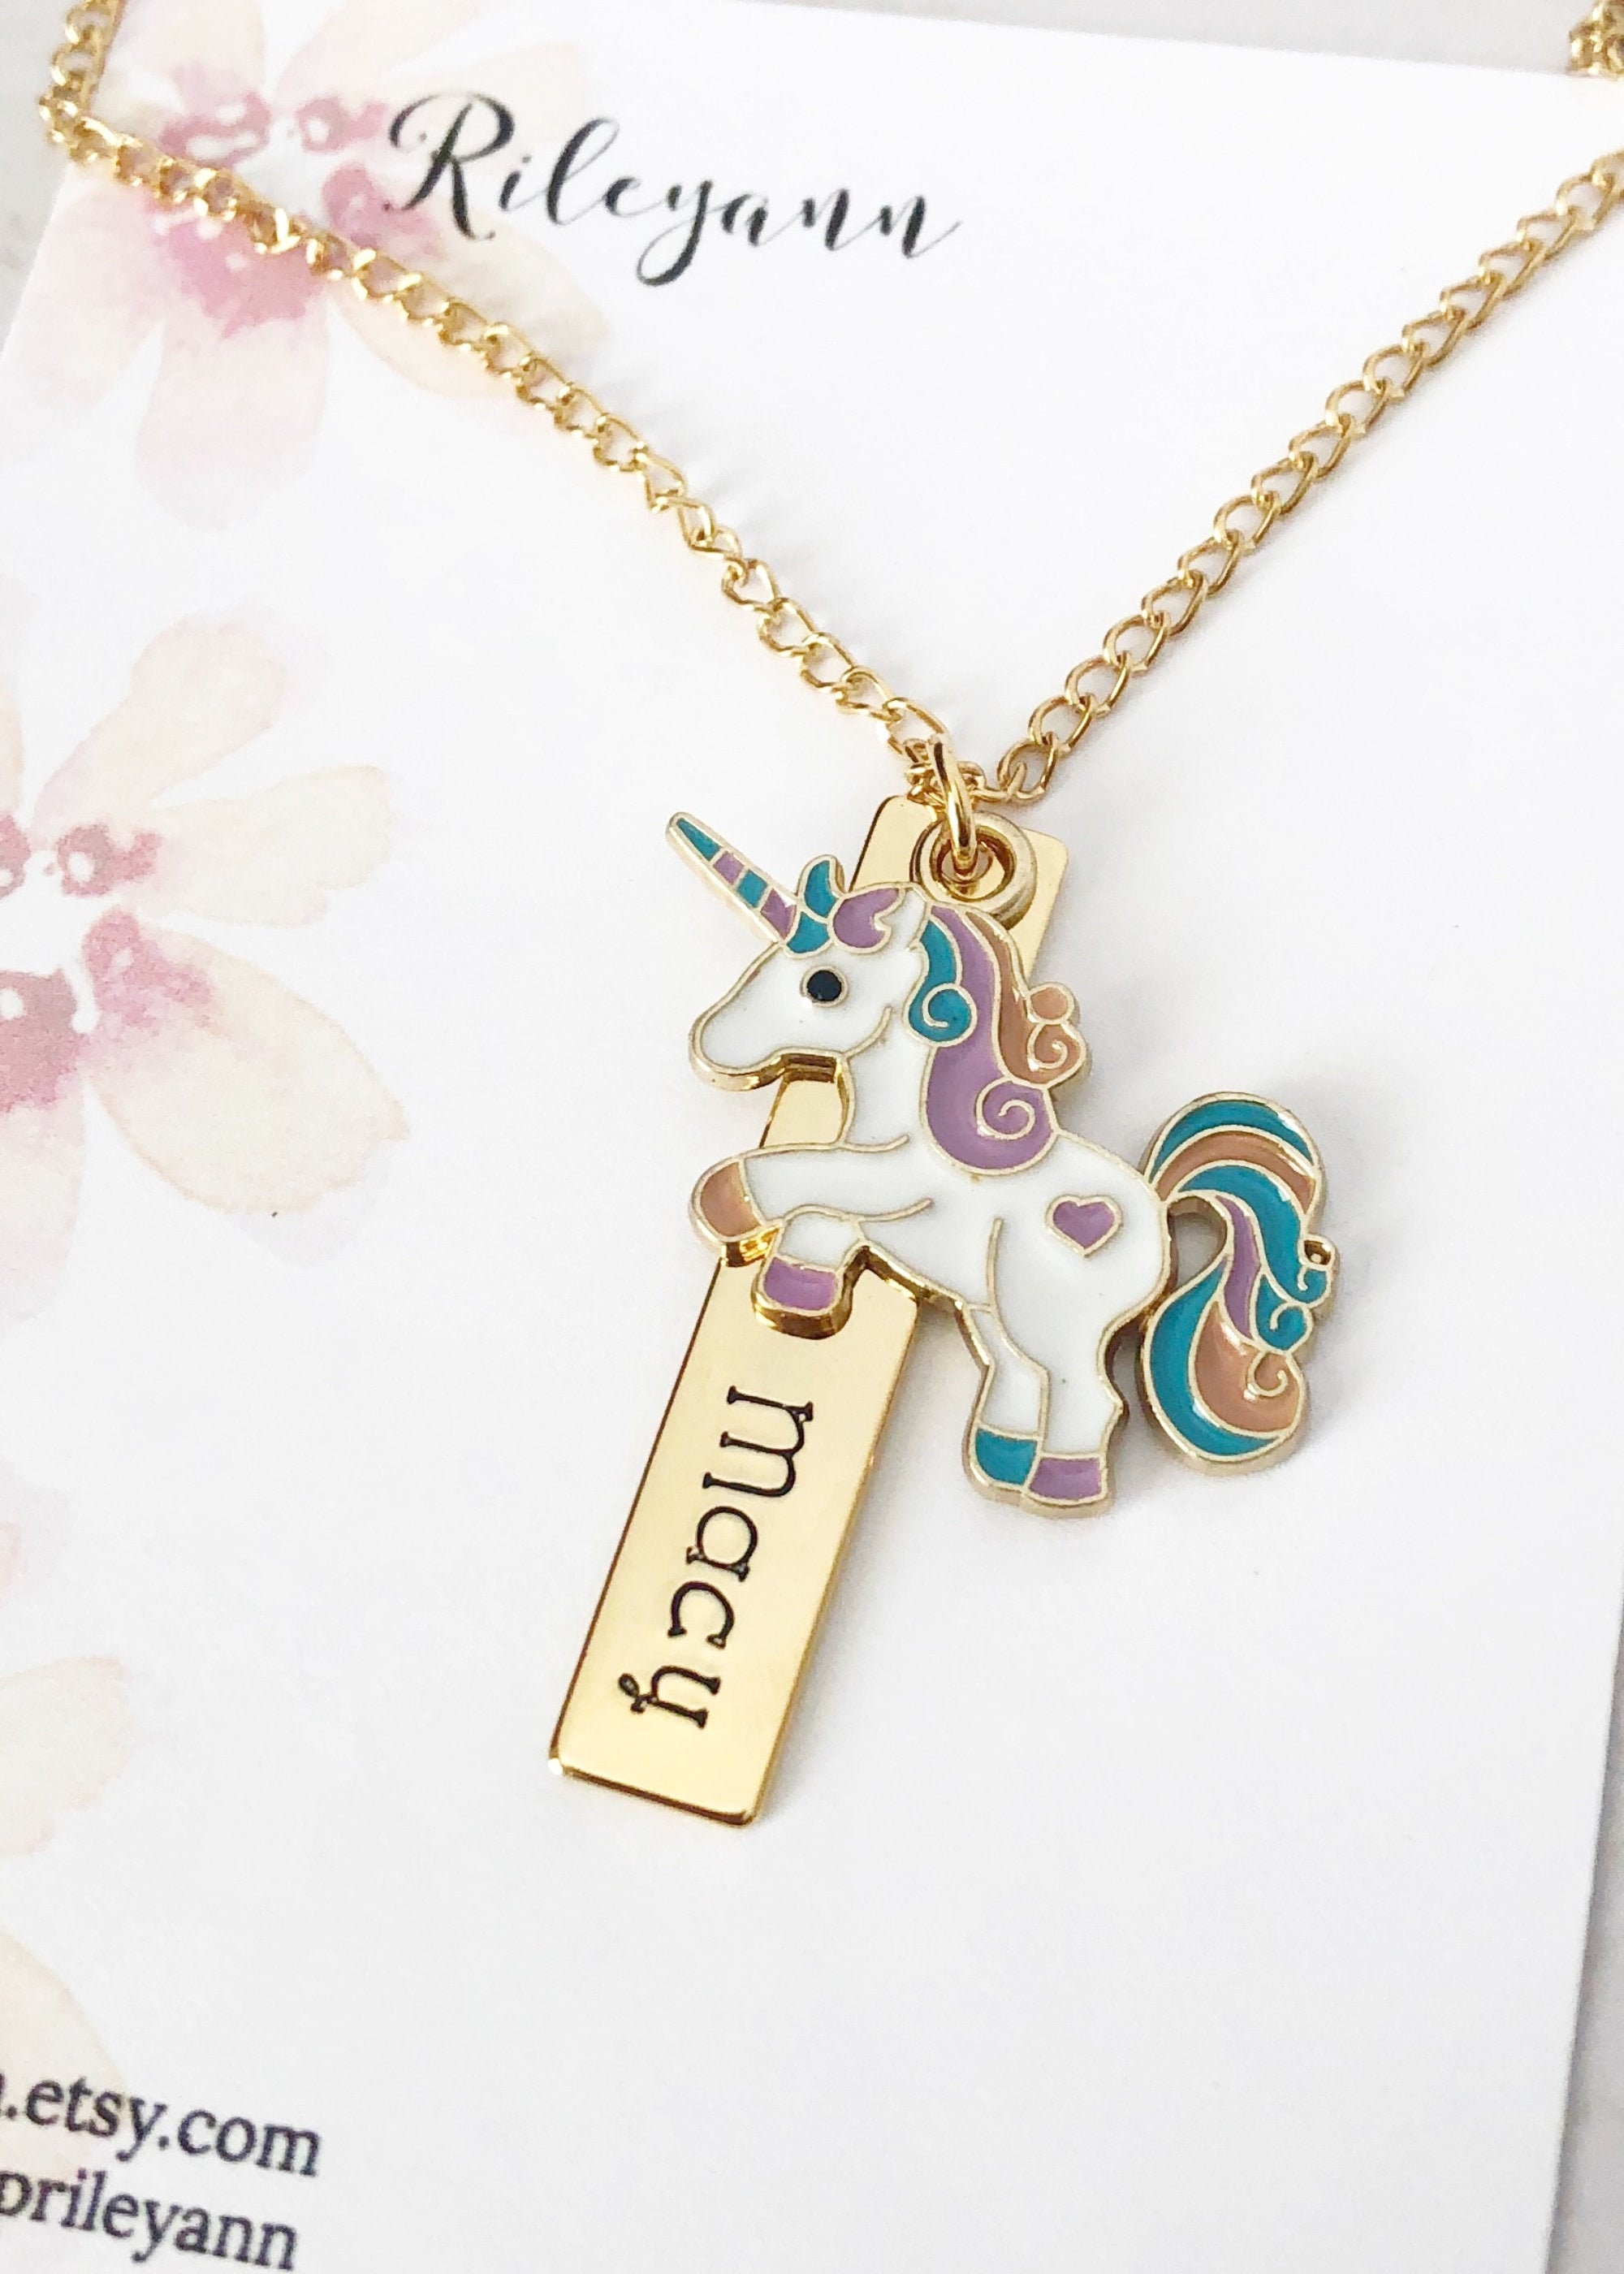 ZMYGOLON 24 PCS Kids Jewelry for Girls, Kids Necklaces Bracelets Rings with  Unicorn Mermaid Dinosaur Rainbow Charms, Little Girls Jewelry Set for